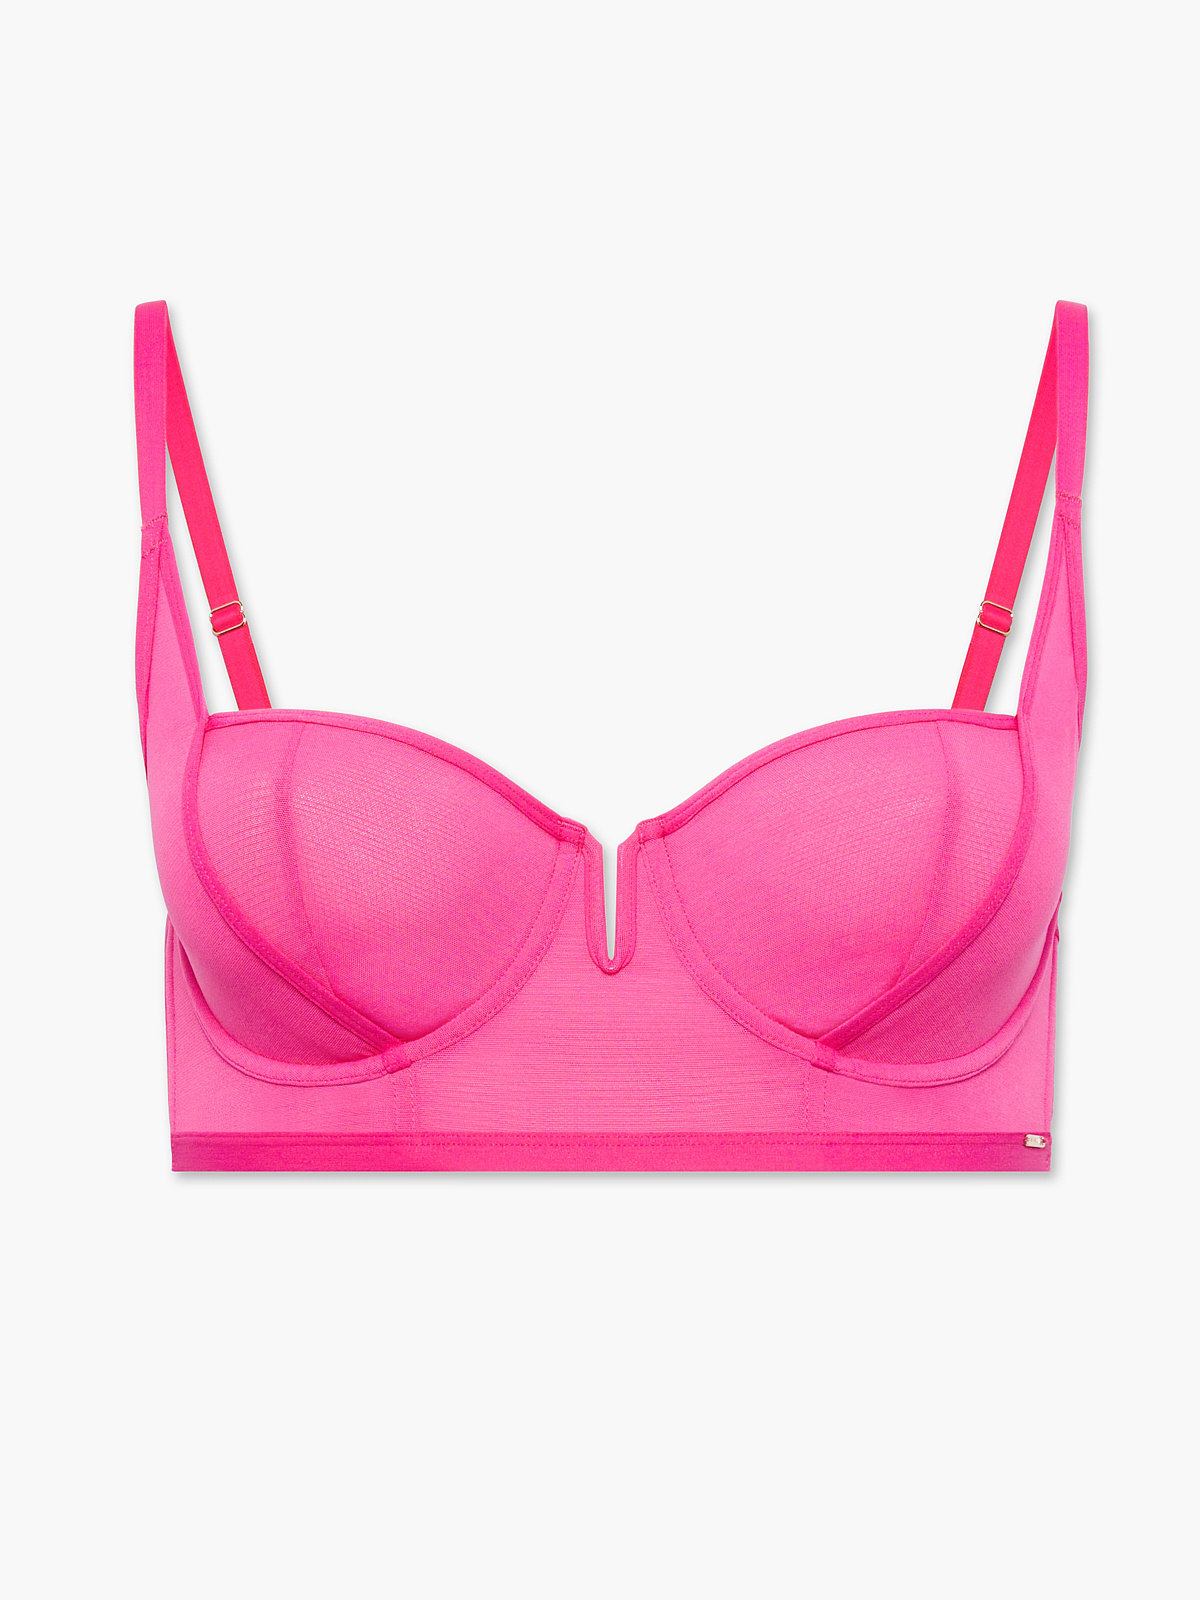 Victoria's Secret Push-up Bra Pink Size 32 B - $20 (71% Off Retail